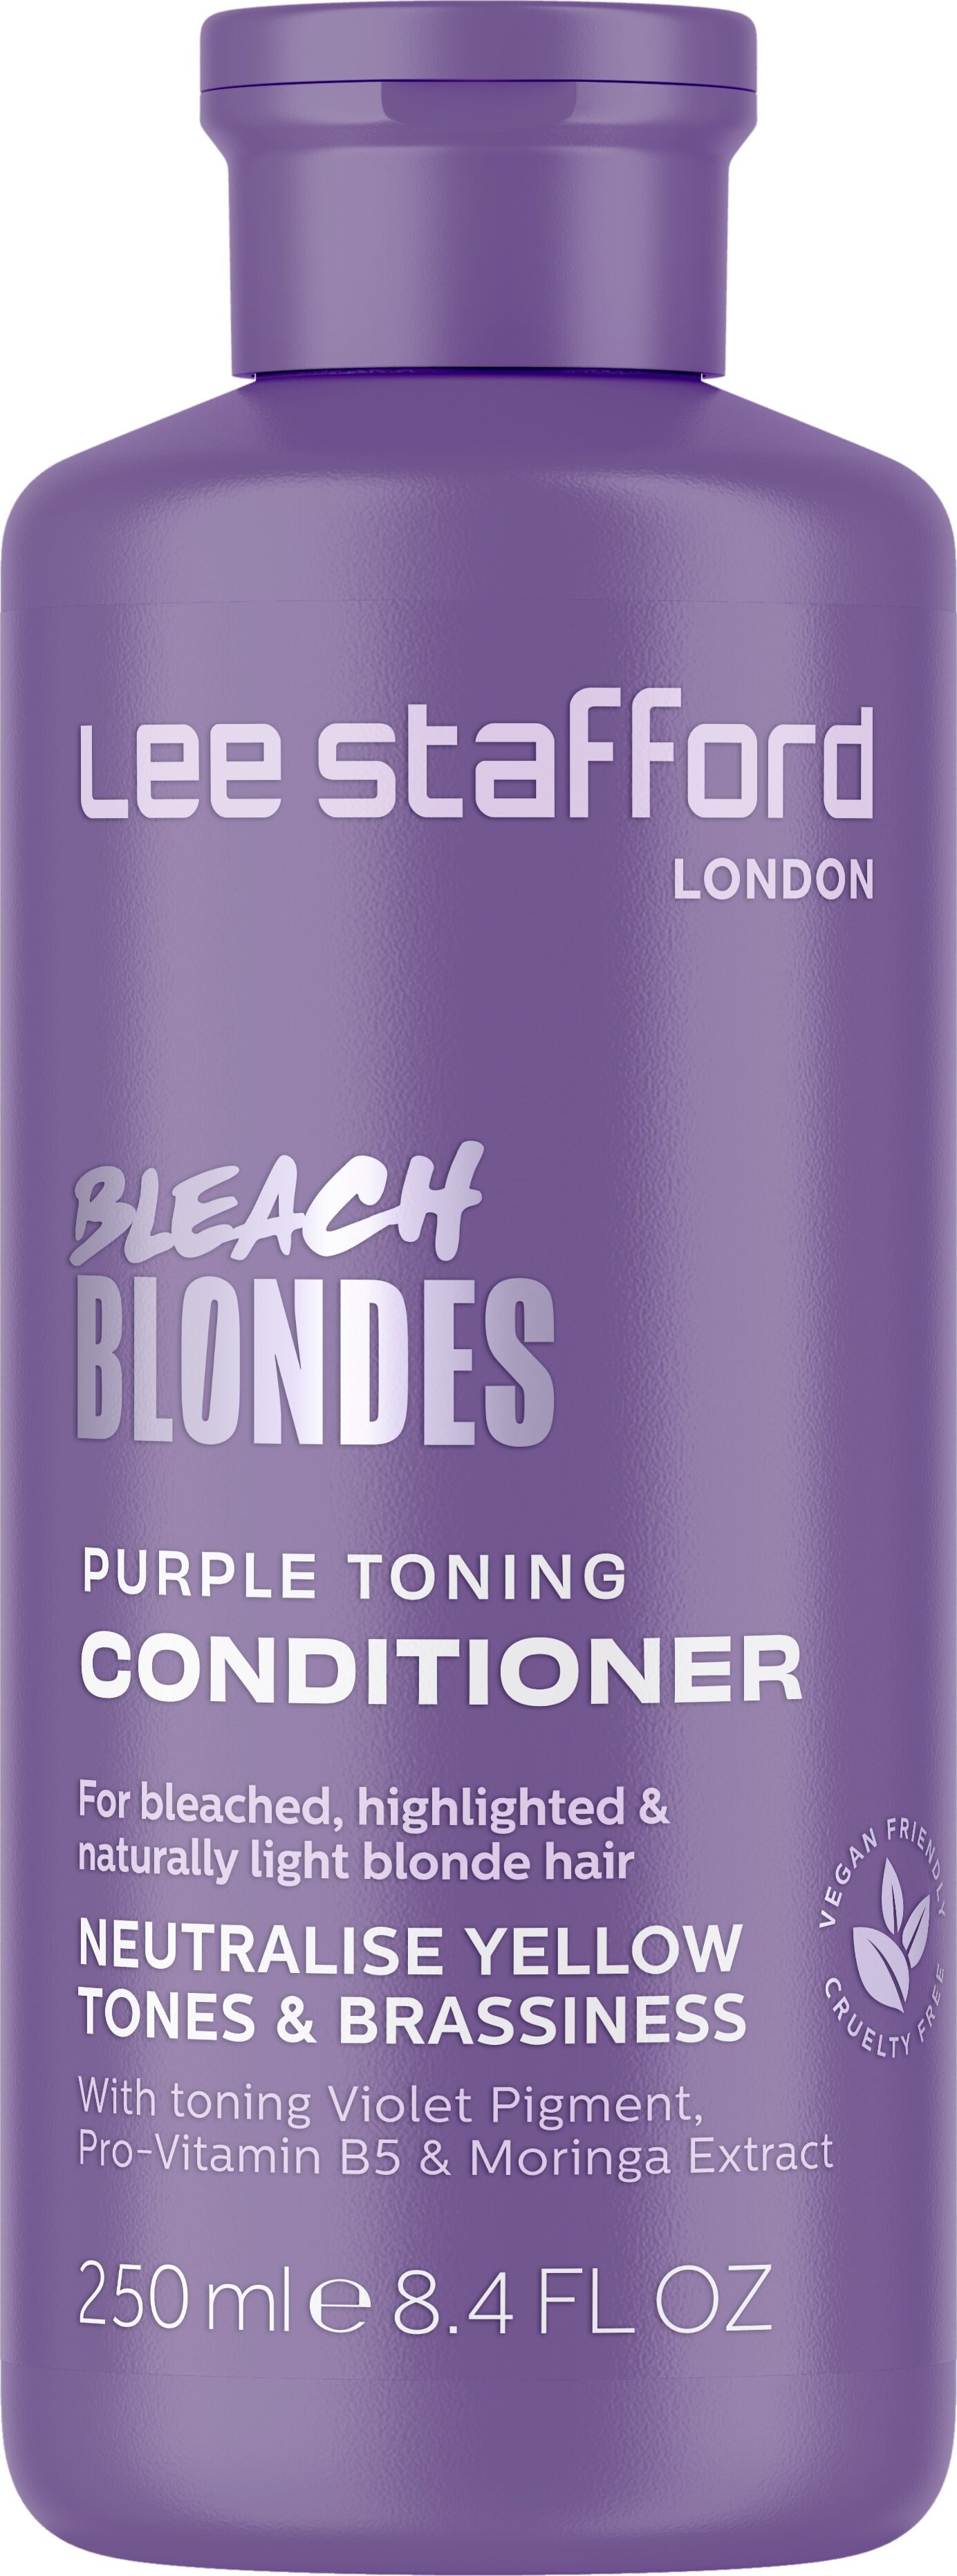 Lee Stafford - Bleach Blondes Purple Toning Conditioner - 250 Ml